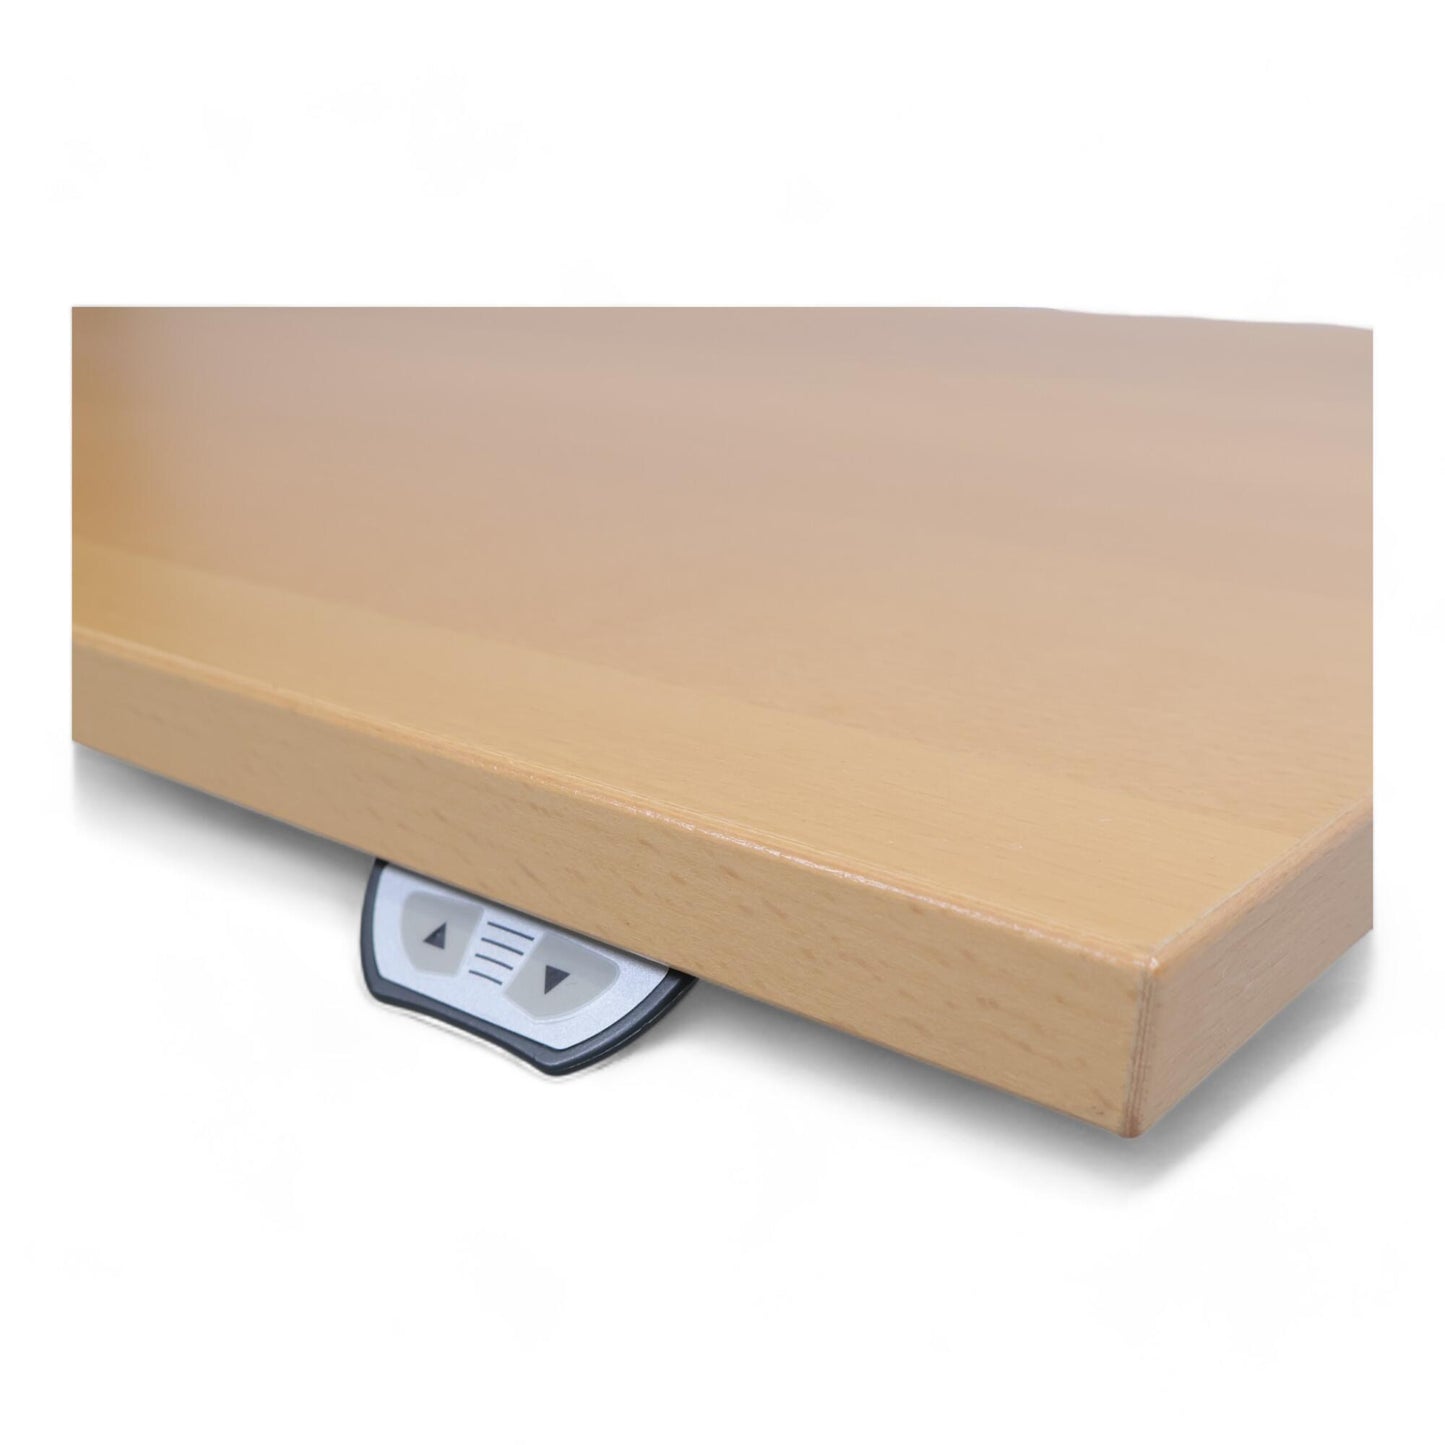 Nyrenset | 140x80 Kinnarps Elektriske hev/senk skrivebord med treplate